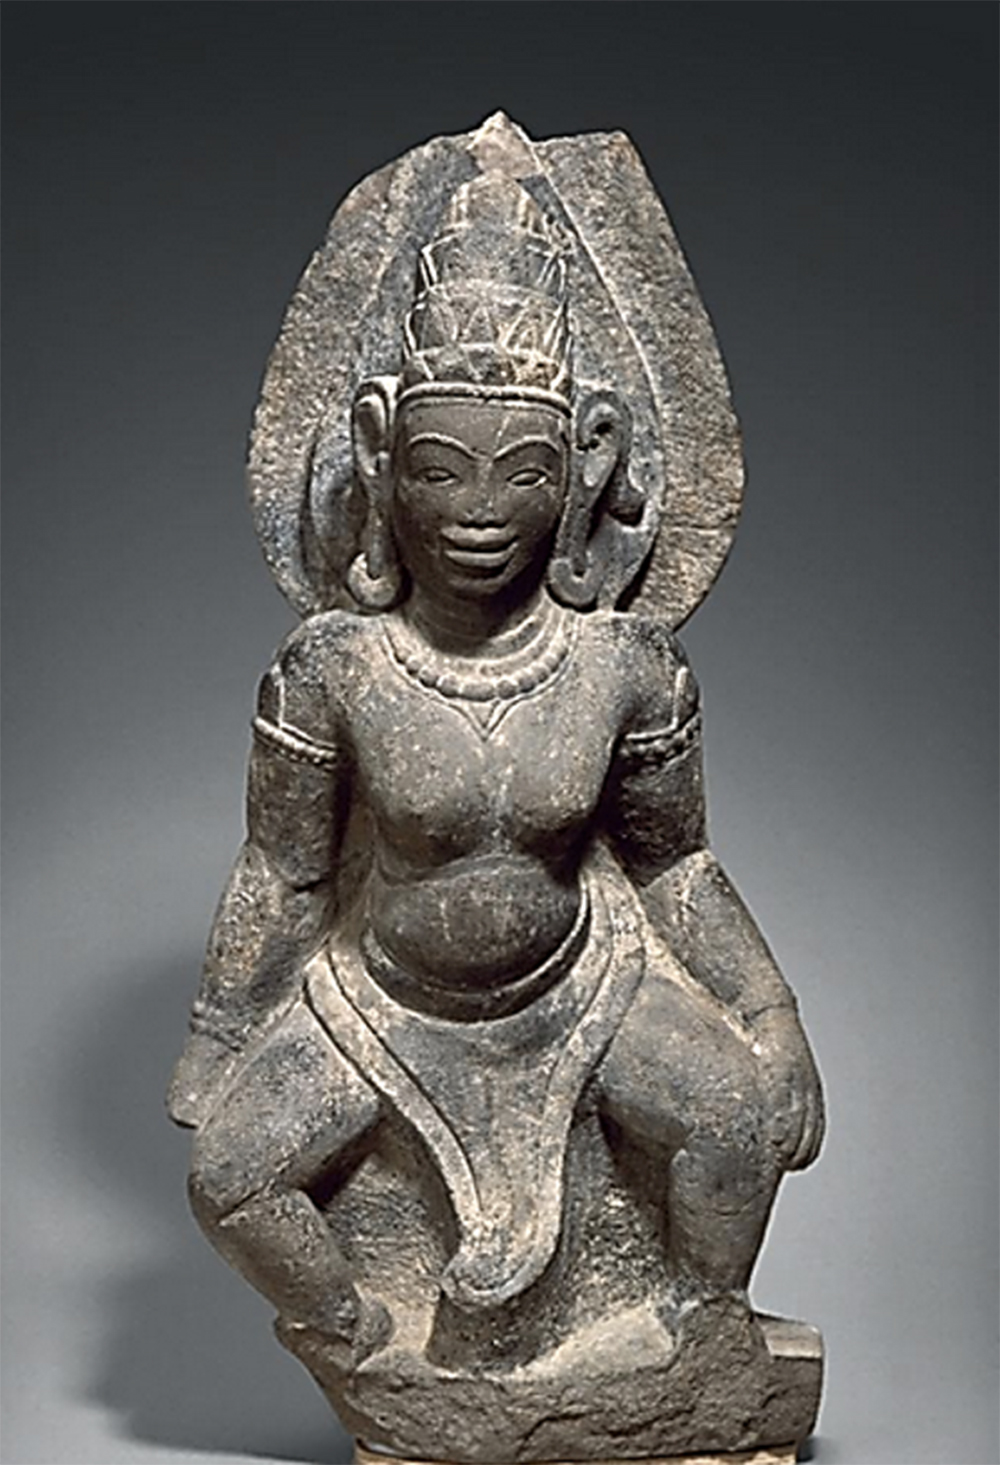 Female Dancer
circa 1075–1125
Vietnam; former Kingdoms of Champa, Binh Dinh province (Thu Thien Temples)
Sandstone
Asian Art Museum of San Francisco, Gift of Christensen Fund, BL77S3
H. 28 x W. 13 ½ x D. 8 in. (71.1 x 34.3 x 20.3 cm)
